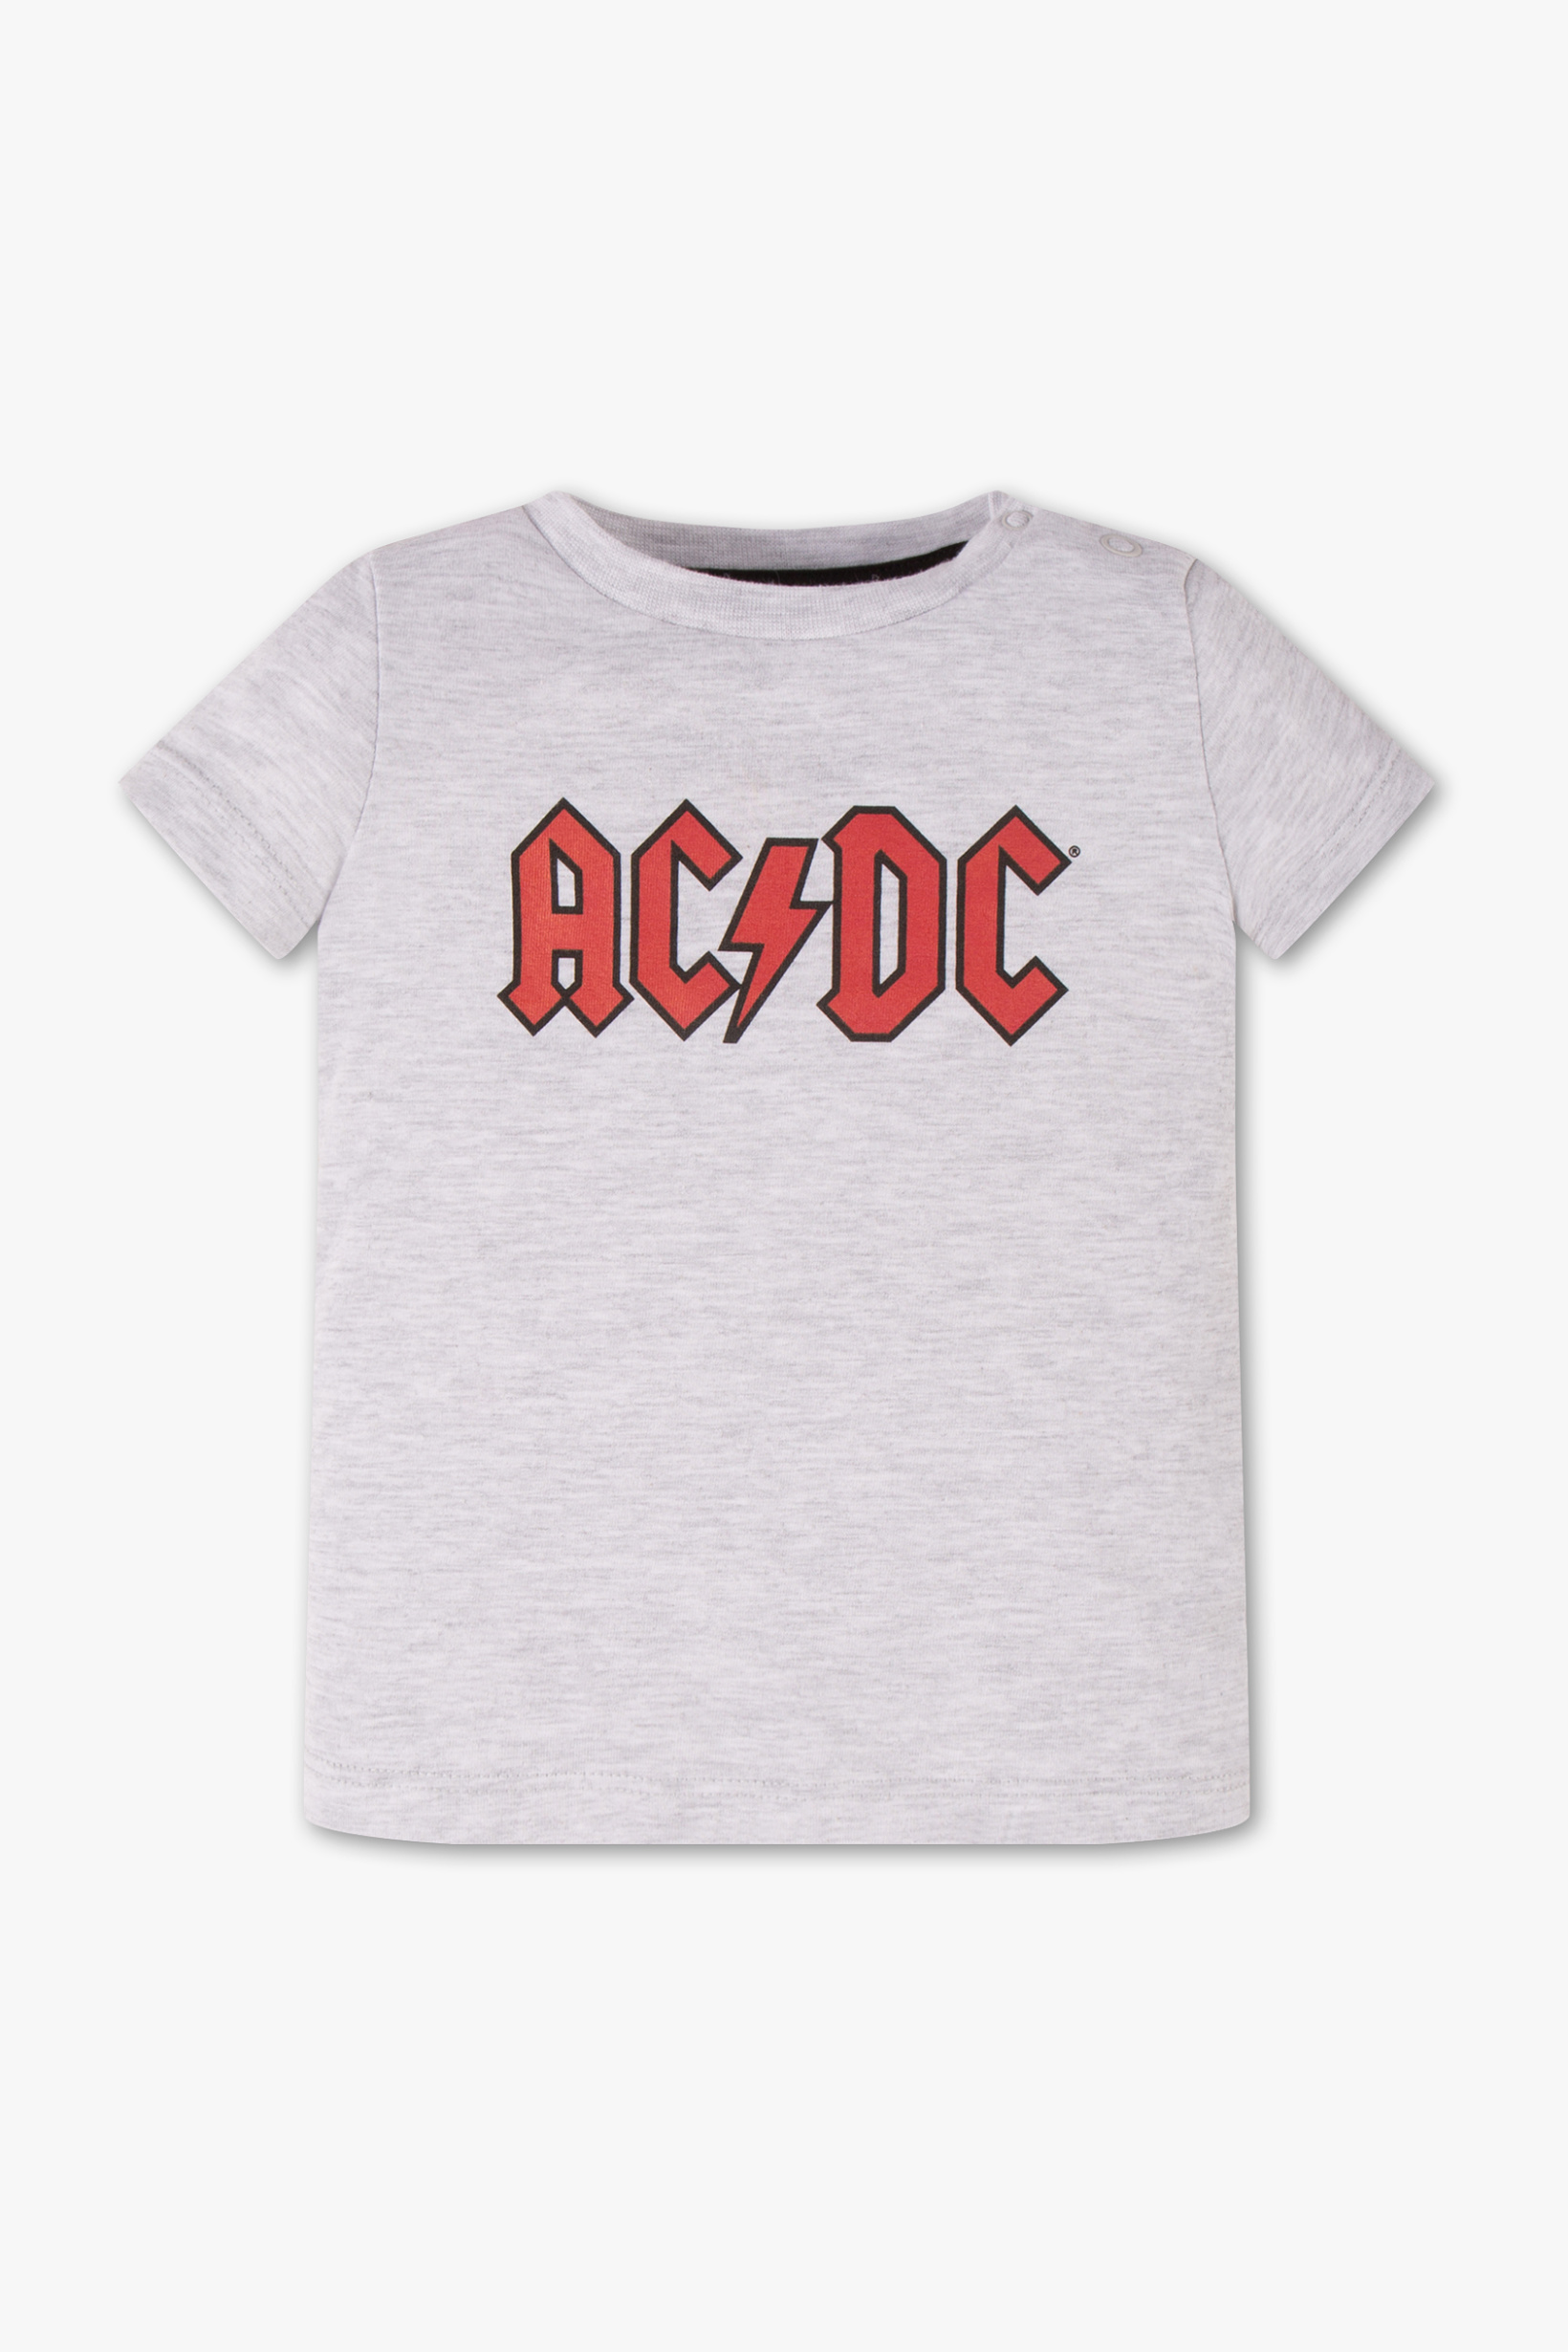 Baby Club AC-DC baby-T-shirt